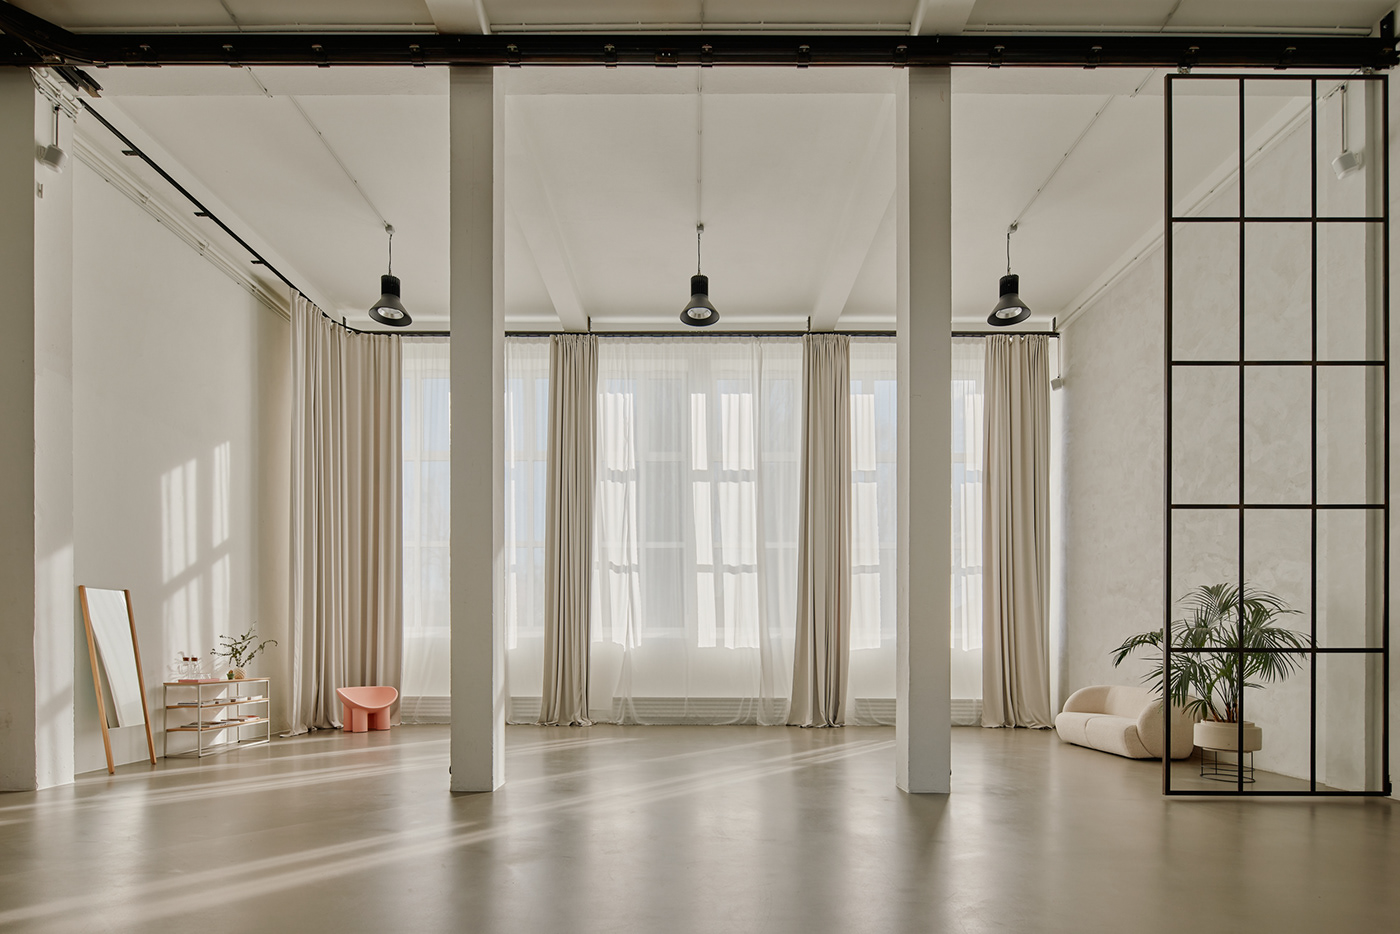 studio architecture modern design furniture Interior LOFT kju hamburg